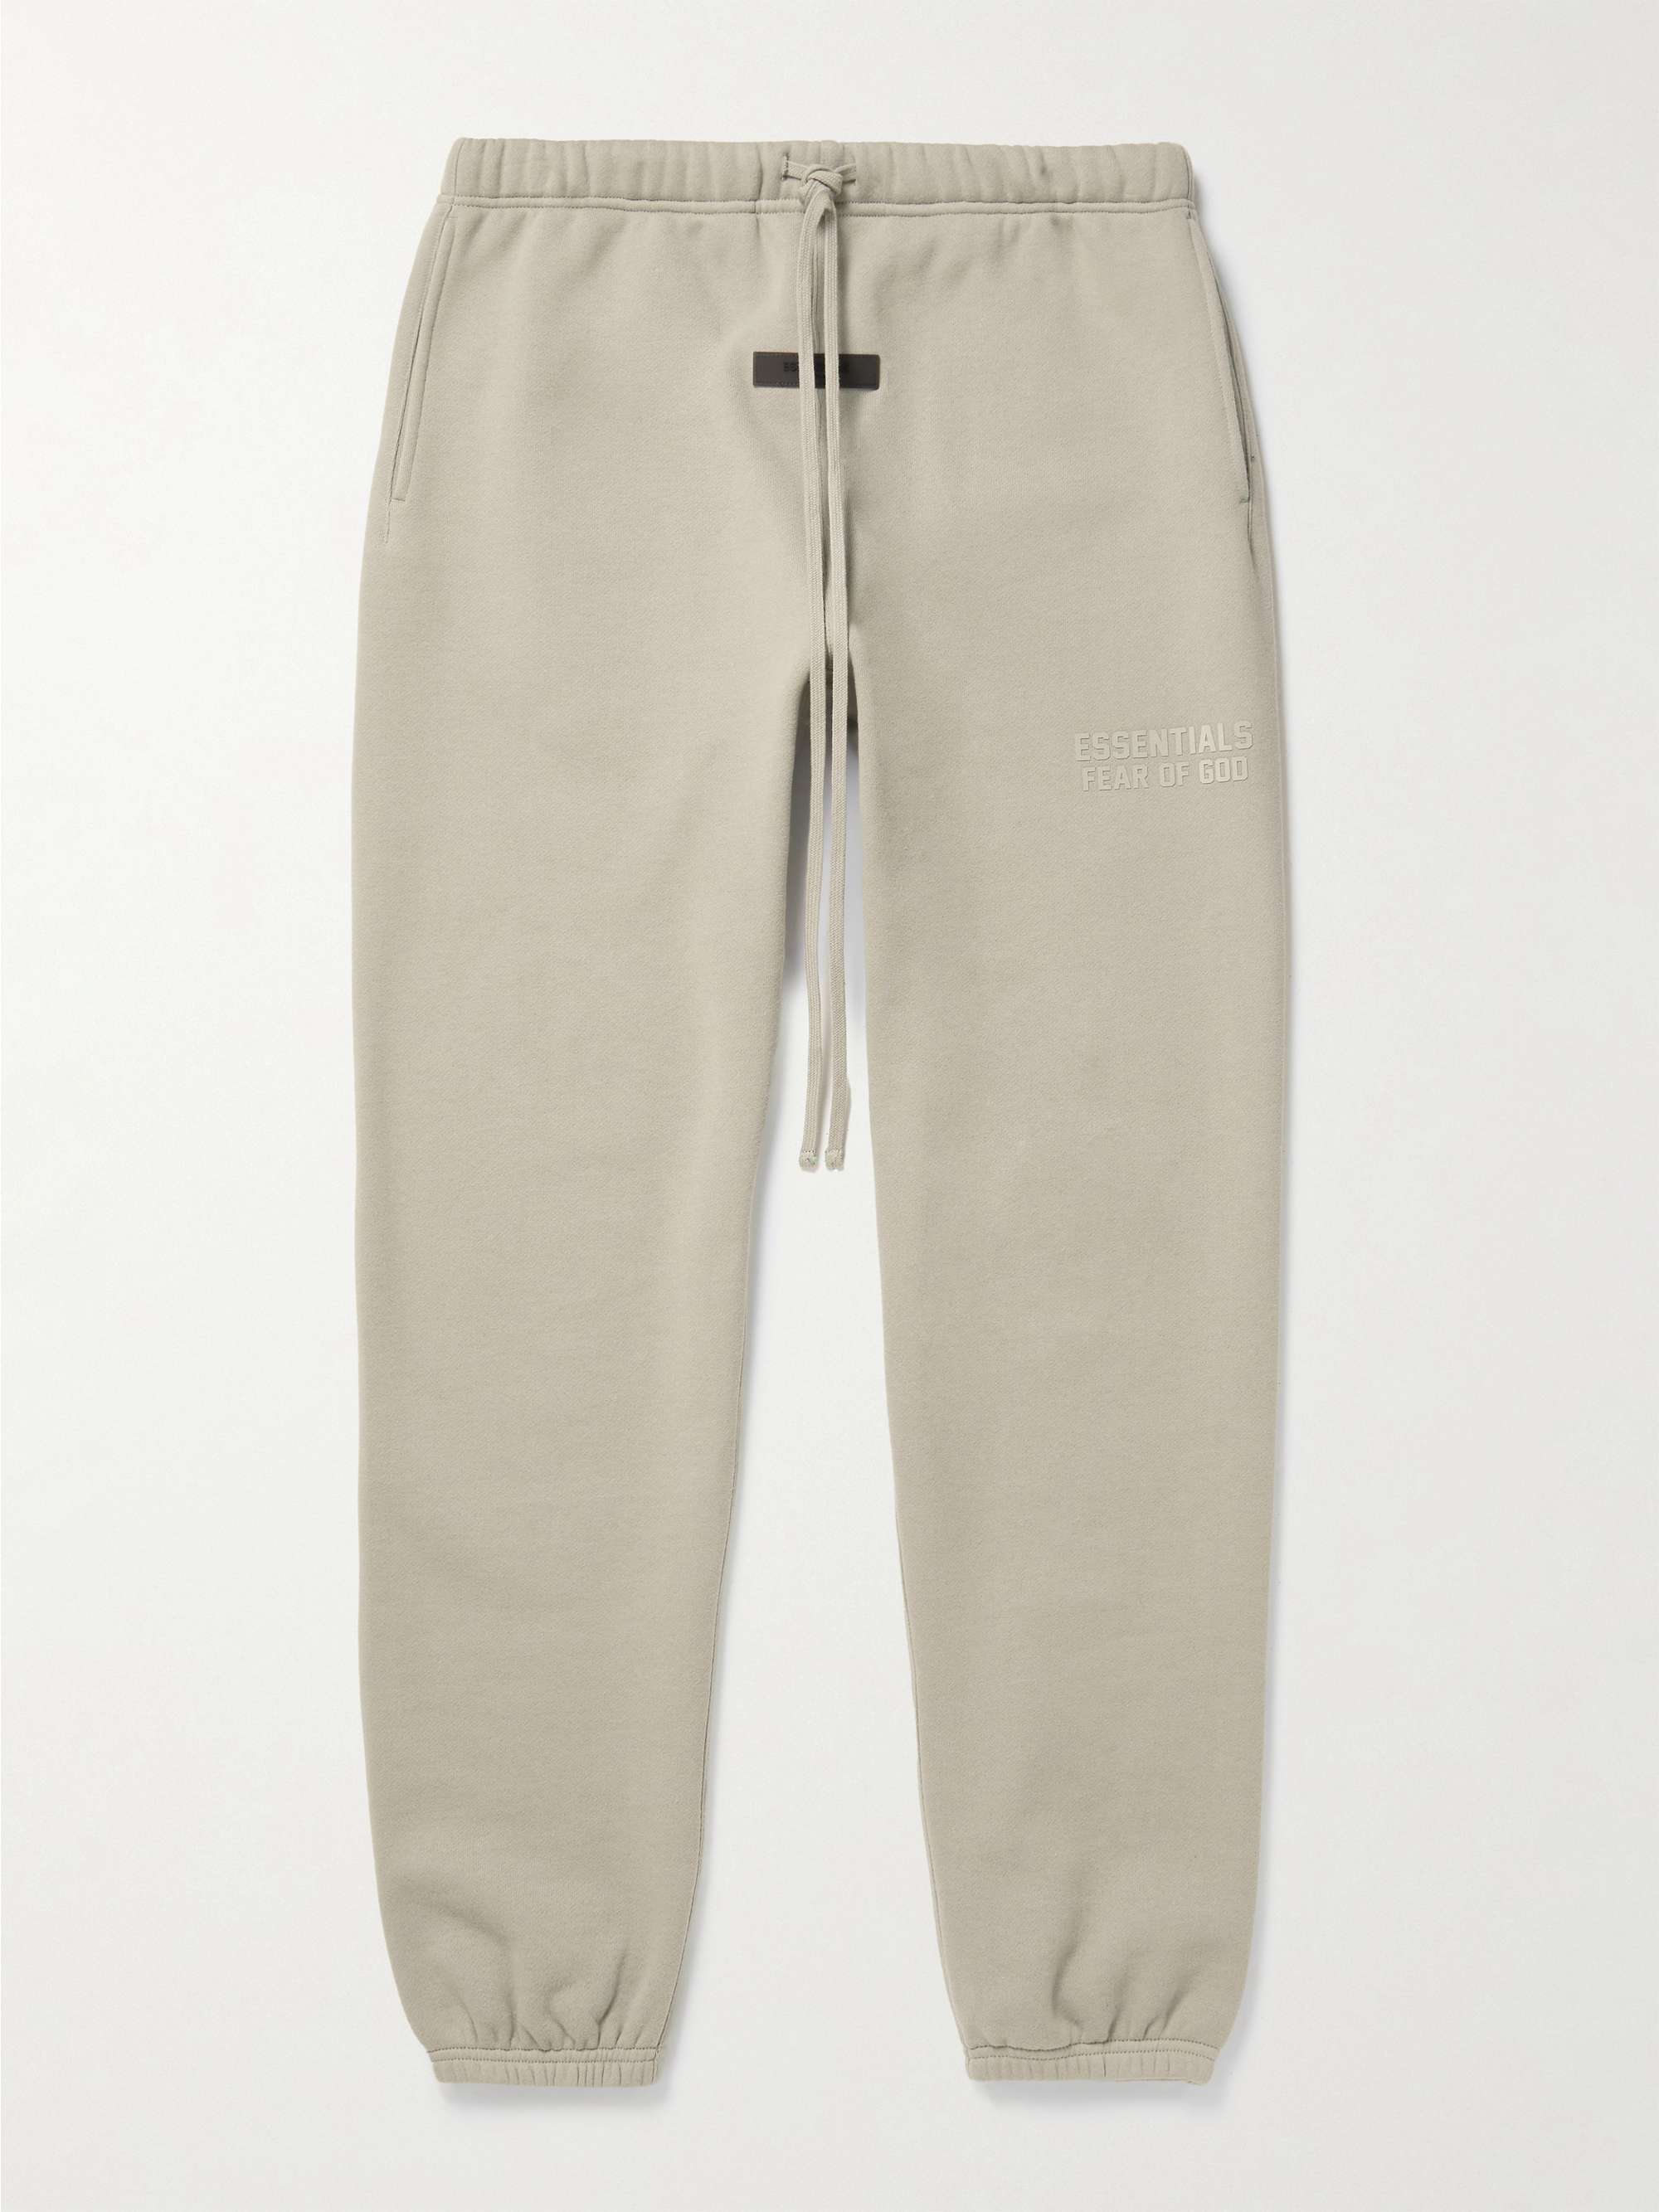 FEAR OF GOD ESSENTIALS Logo-Appliquéd Cotton-Blend Jersey Sweatpants for  Men MR PORTER